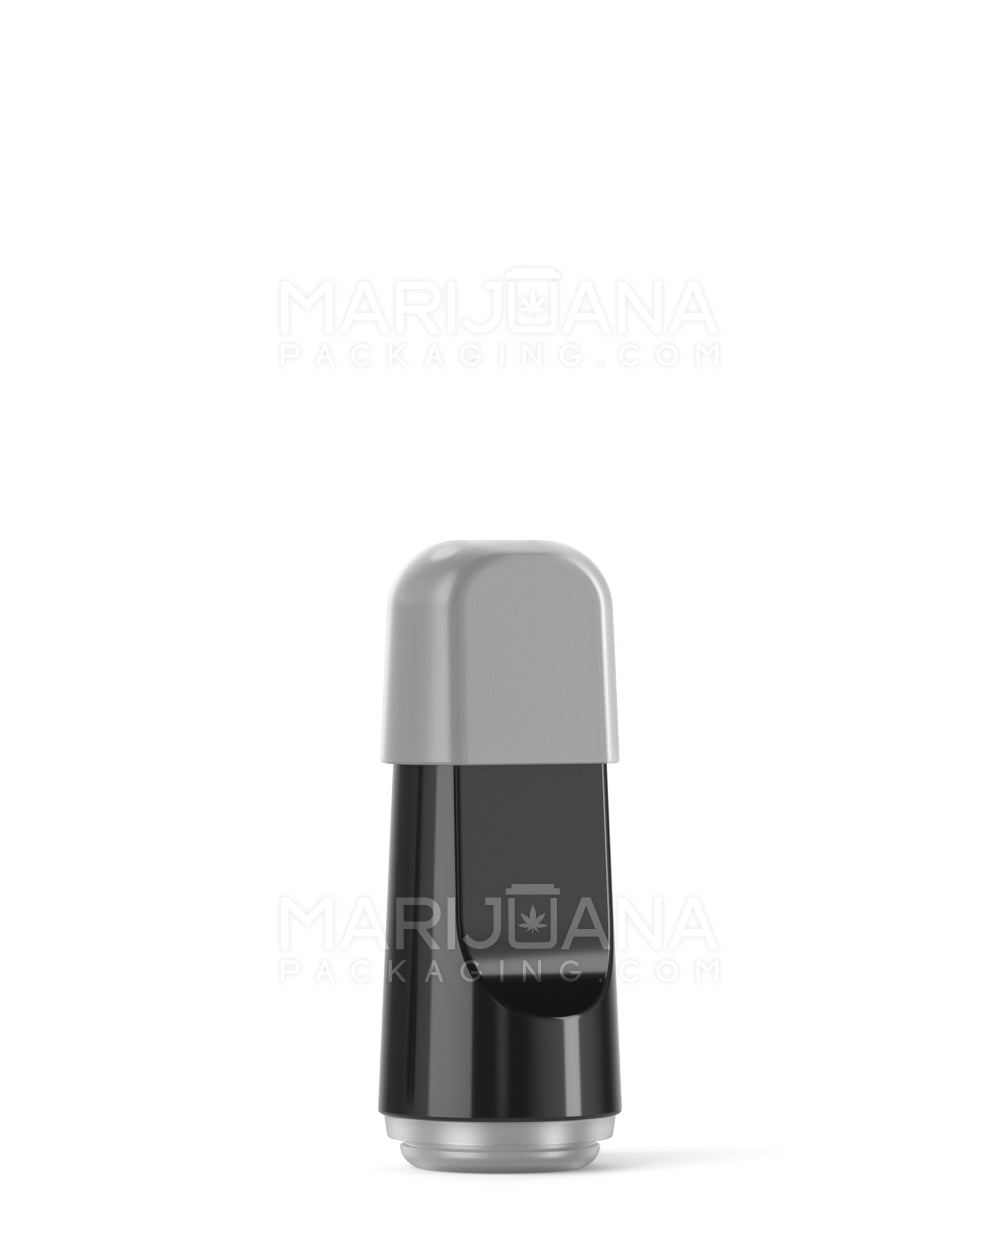 RAE | Flat Vape Mouthpiece for Arbor Press Plastic Cartridges | Black Plastic - Arbor Press - 100 Count